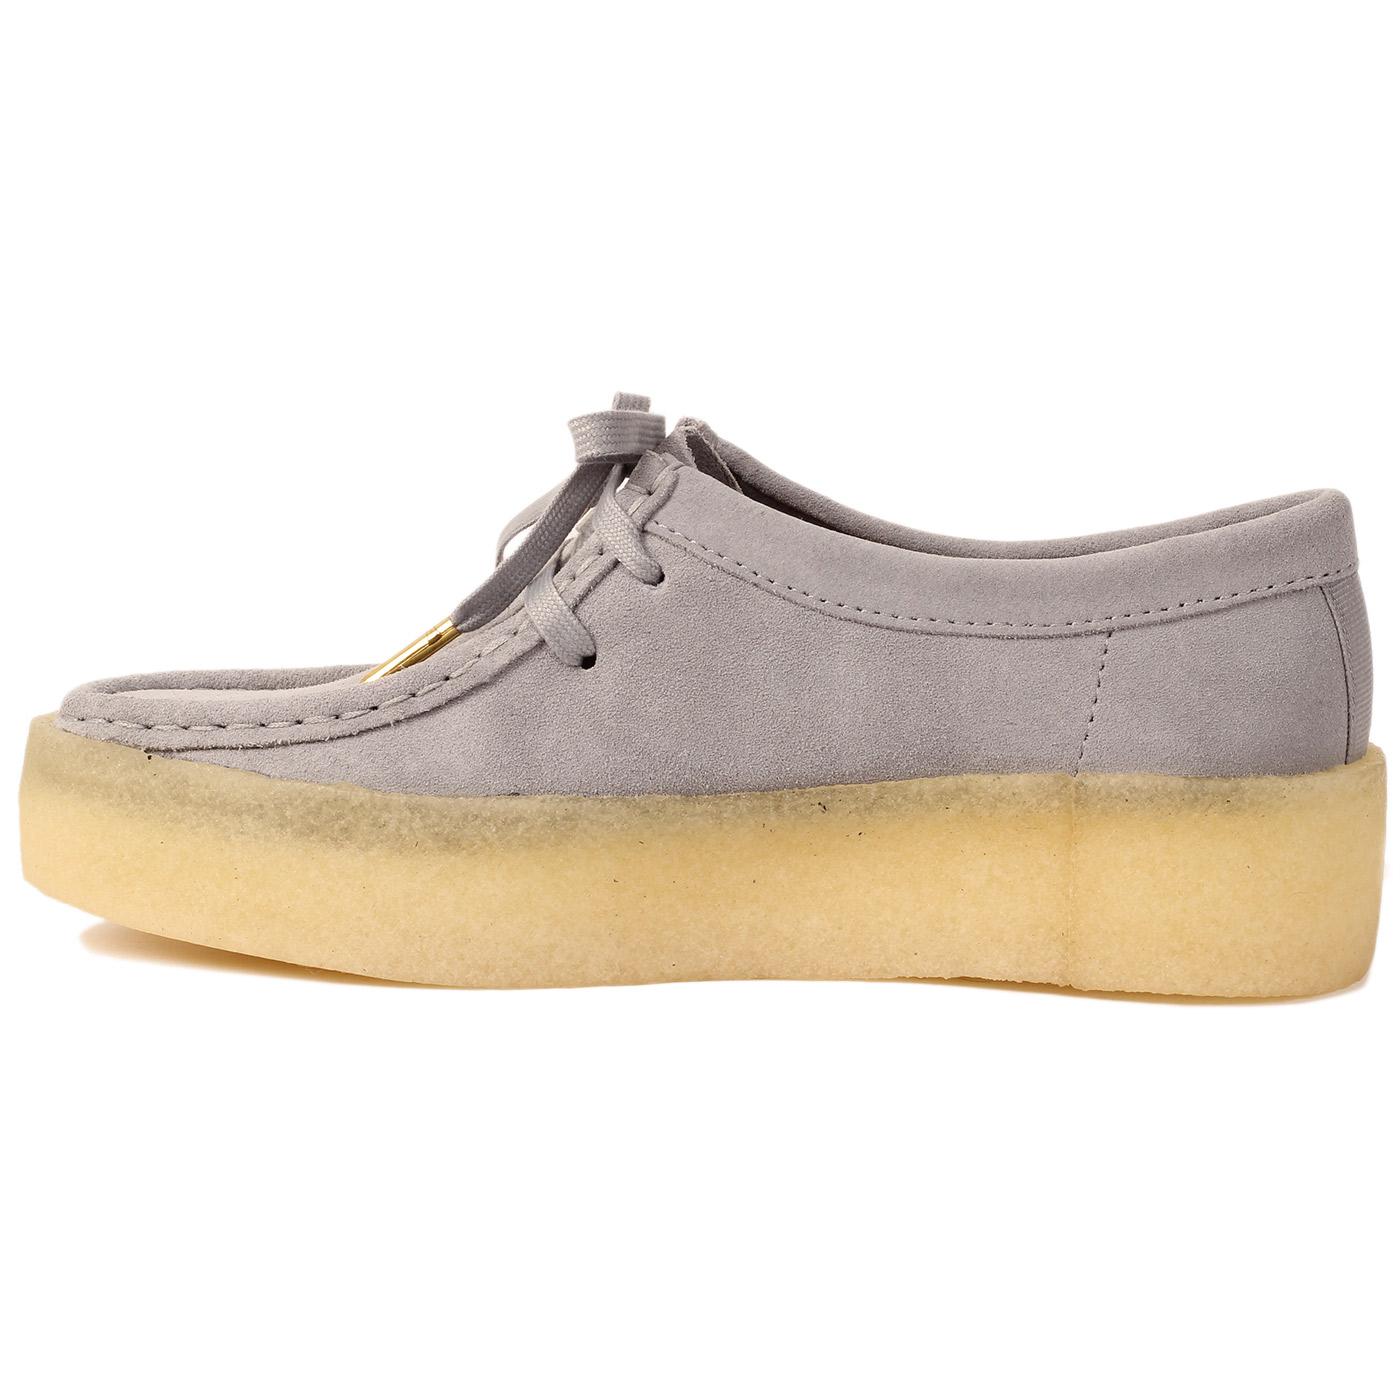 CLARKS ORIGINALS Women's Wallabee Cup Shoes Light Grey